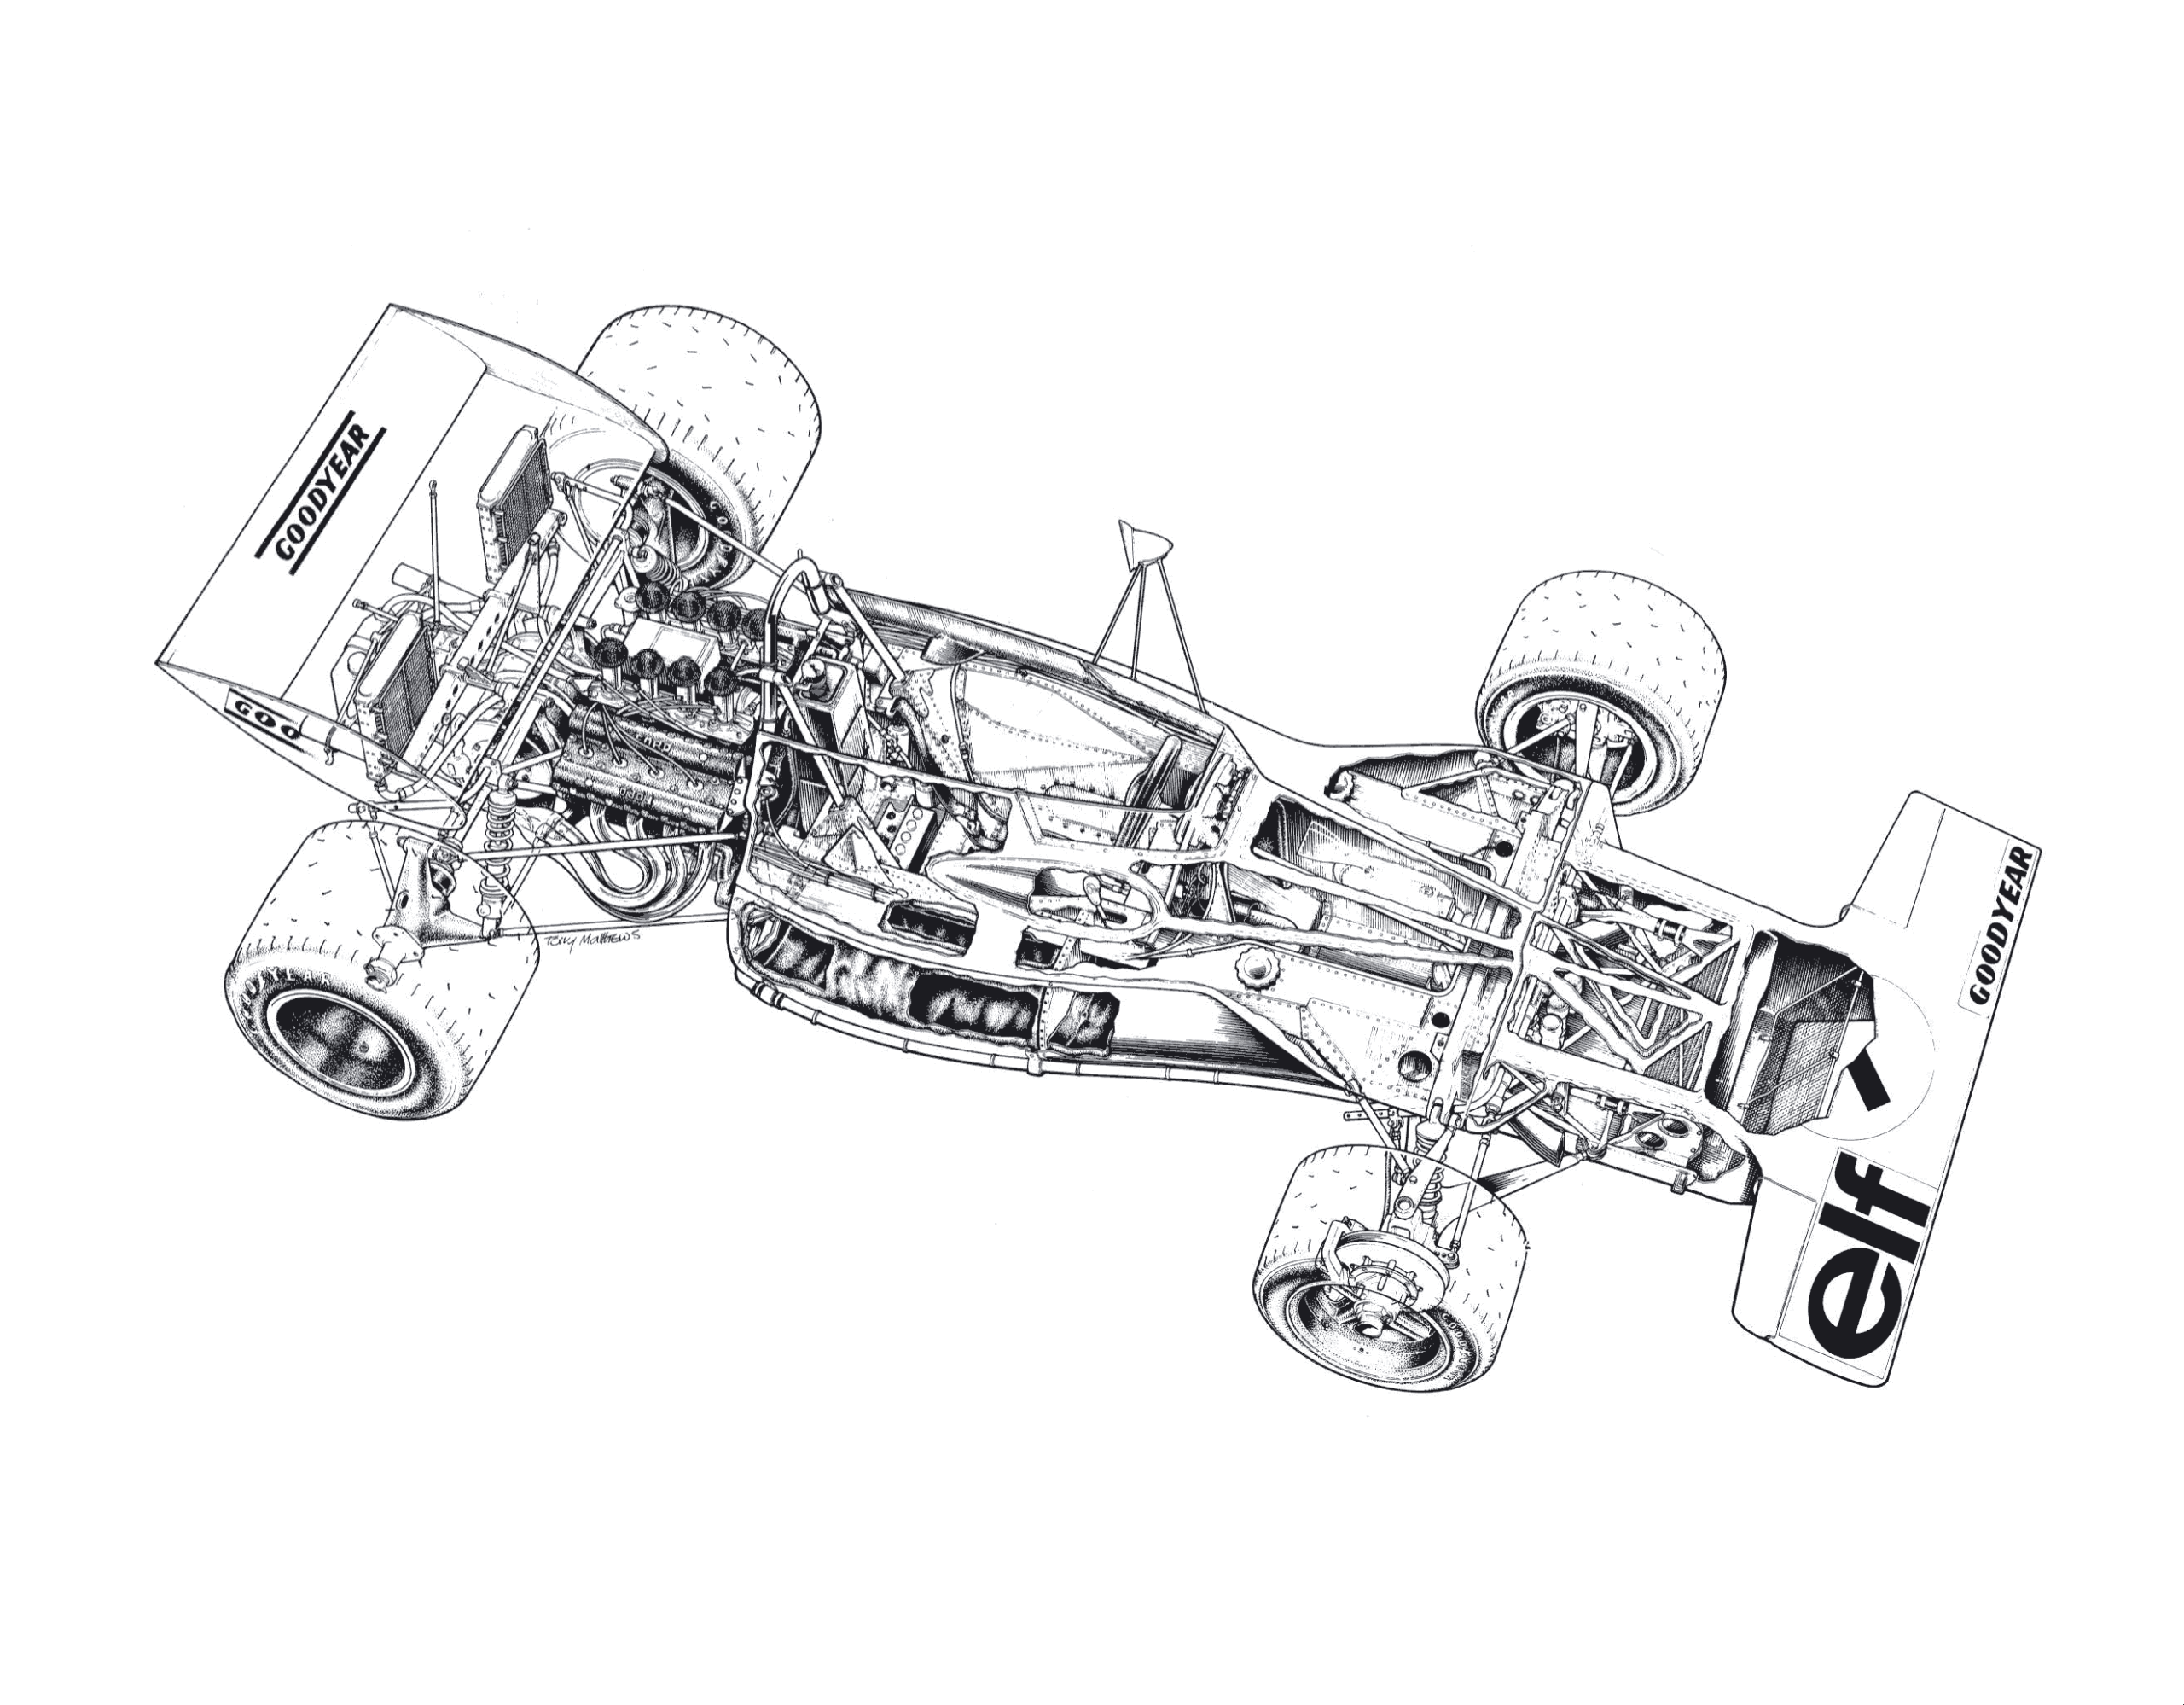 Tyrrell 001 cutaway drawing